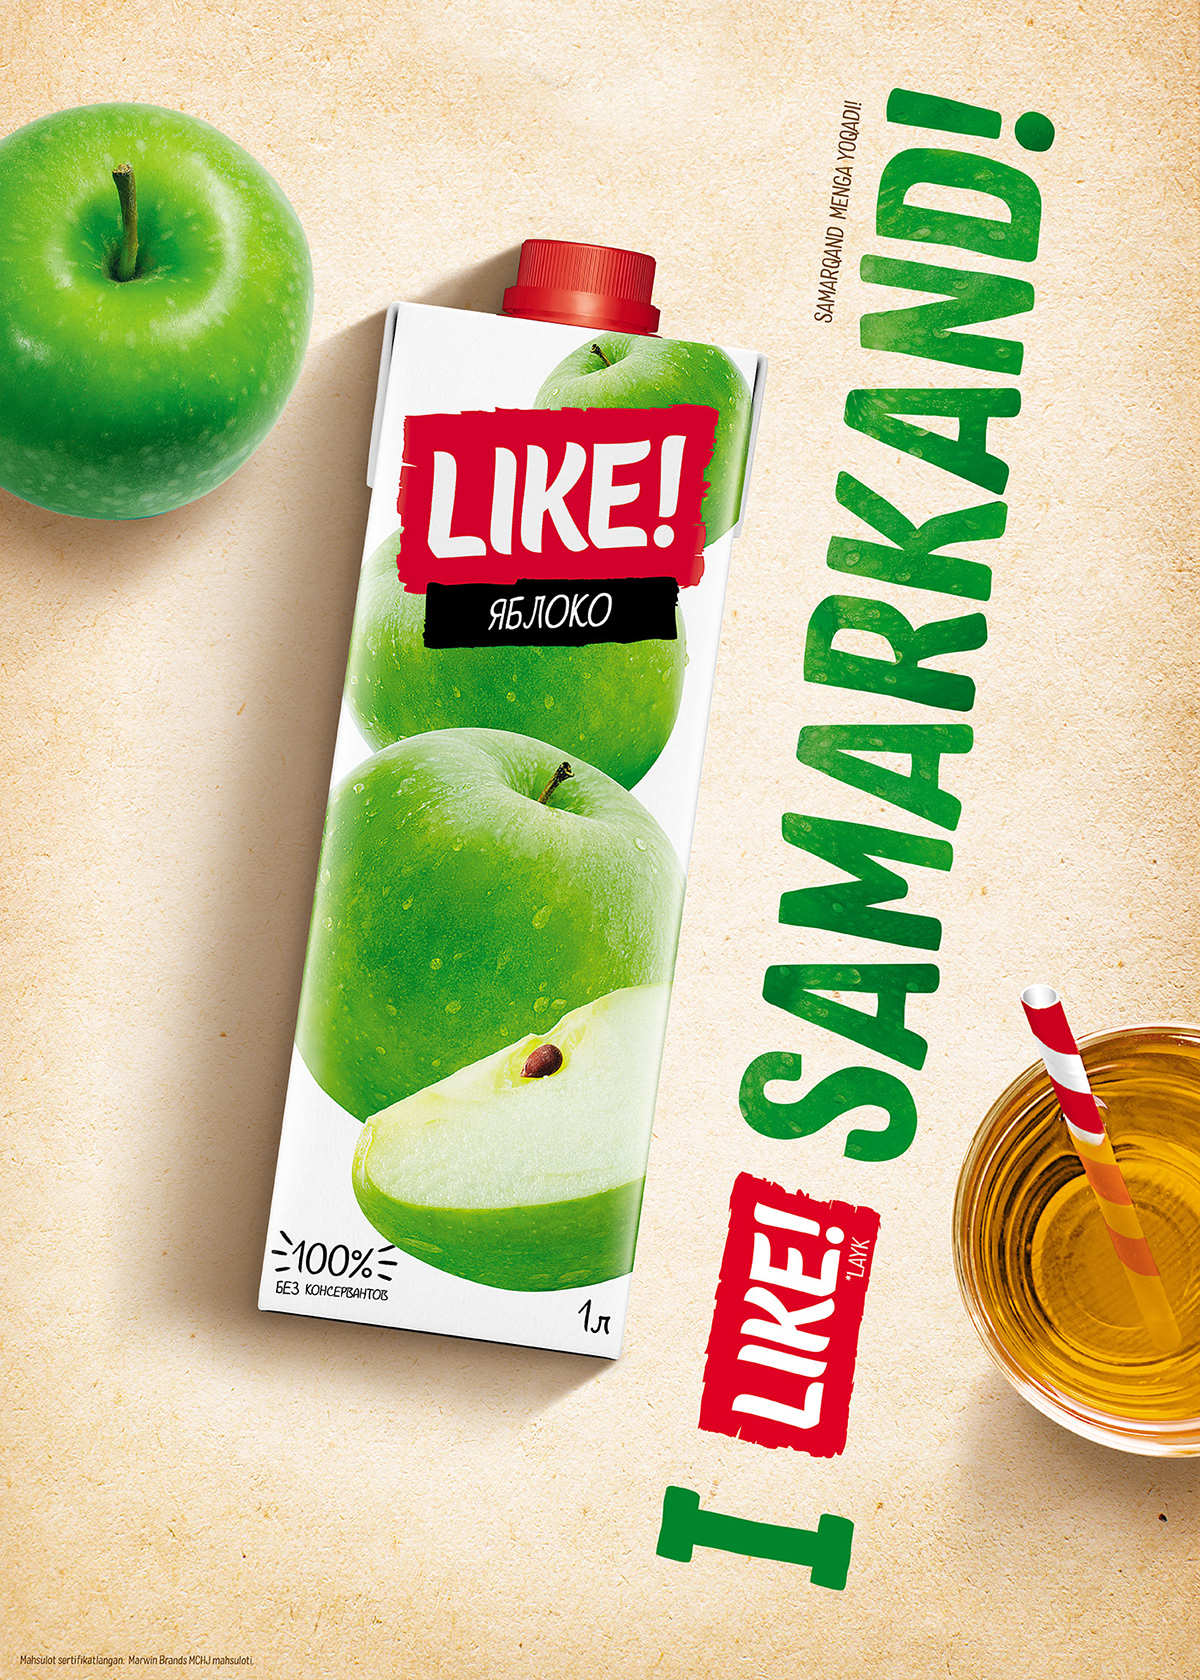 juice tasgkent uzbekistan fruits like juce apple samarkand namangan Bukhara